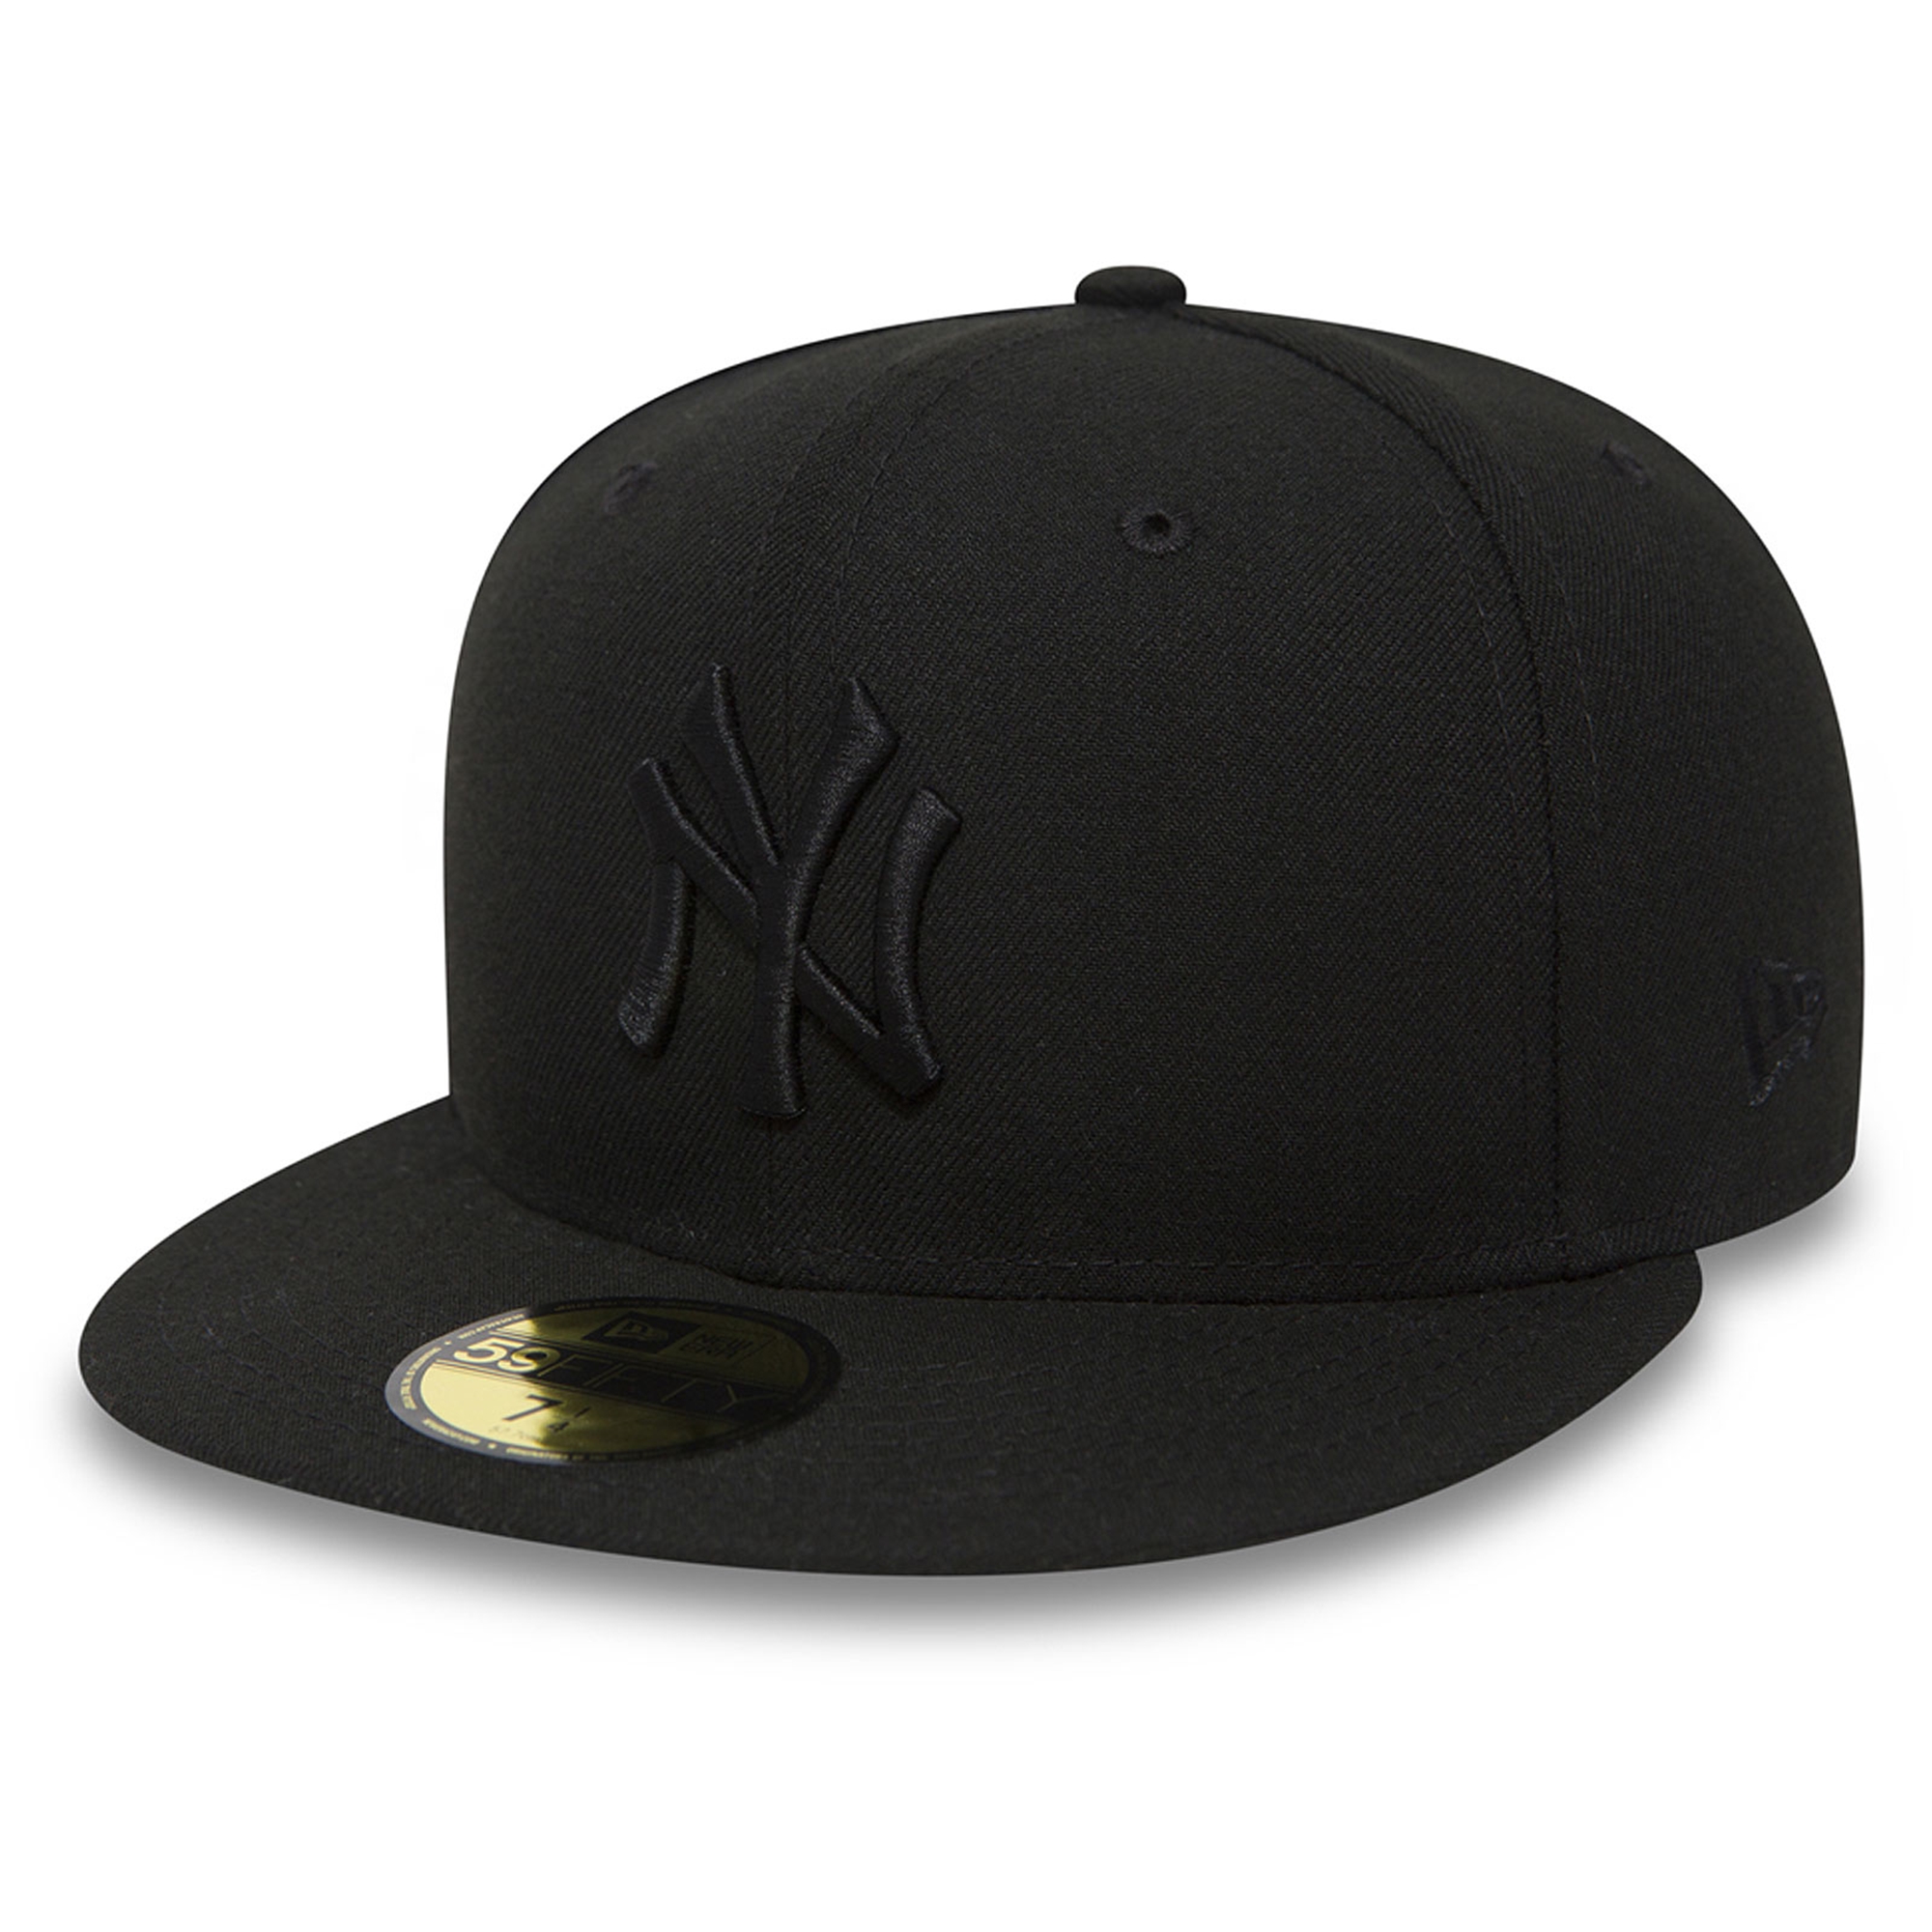 New New Cap Yankees | eBay Cap Basecap MLB Baseball 59Fifty York Era Fitted